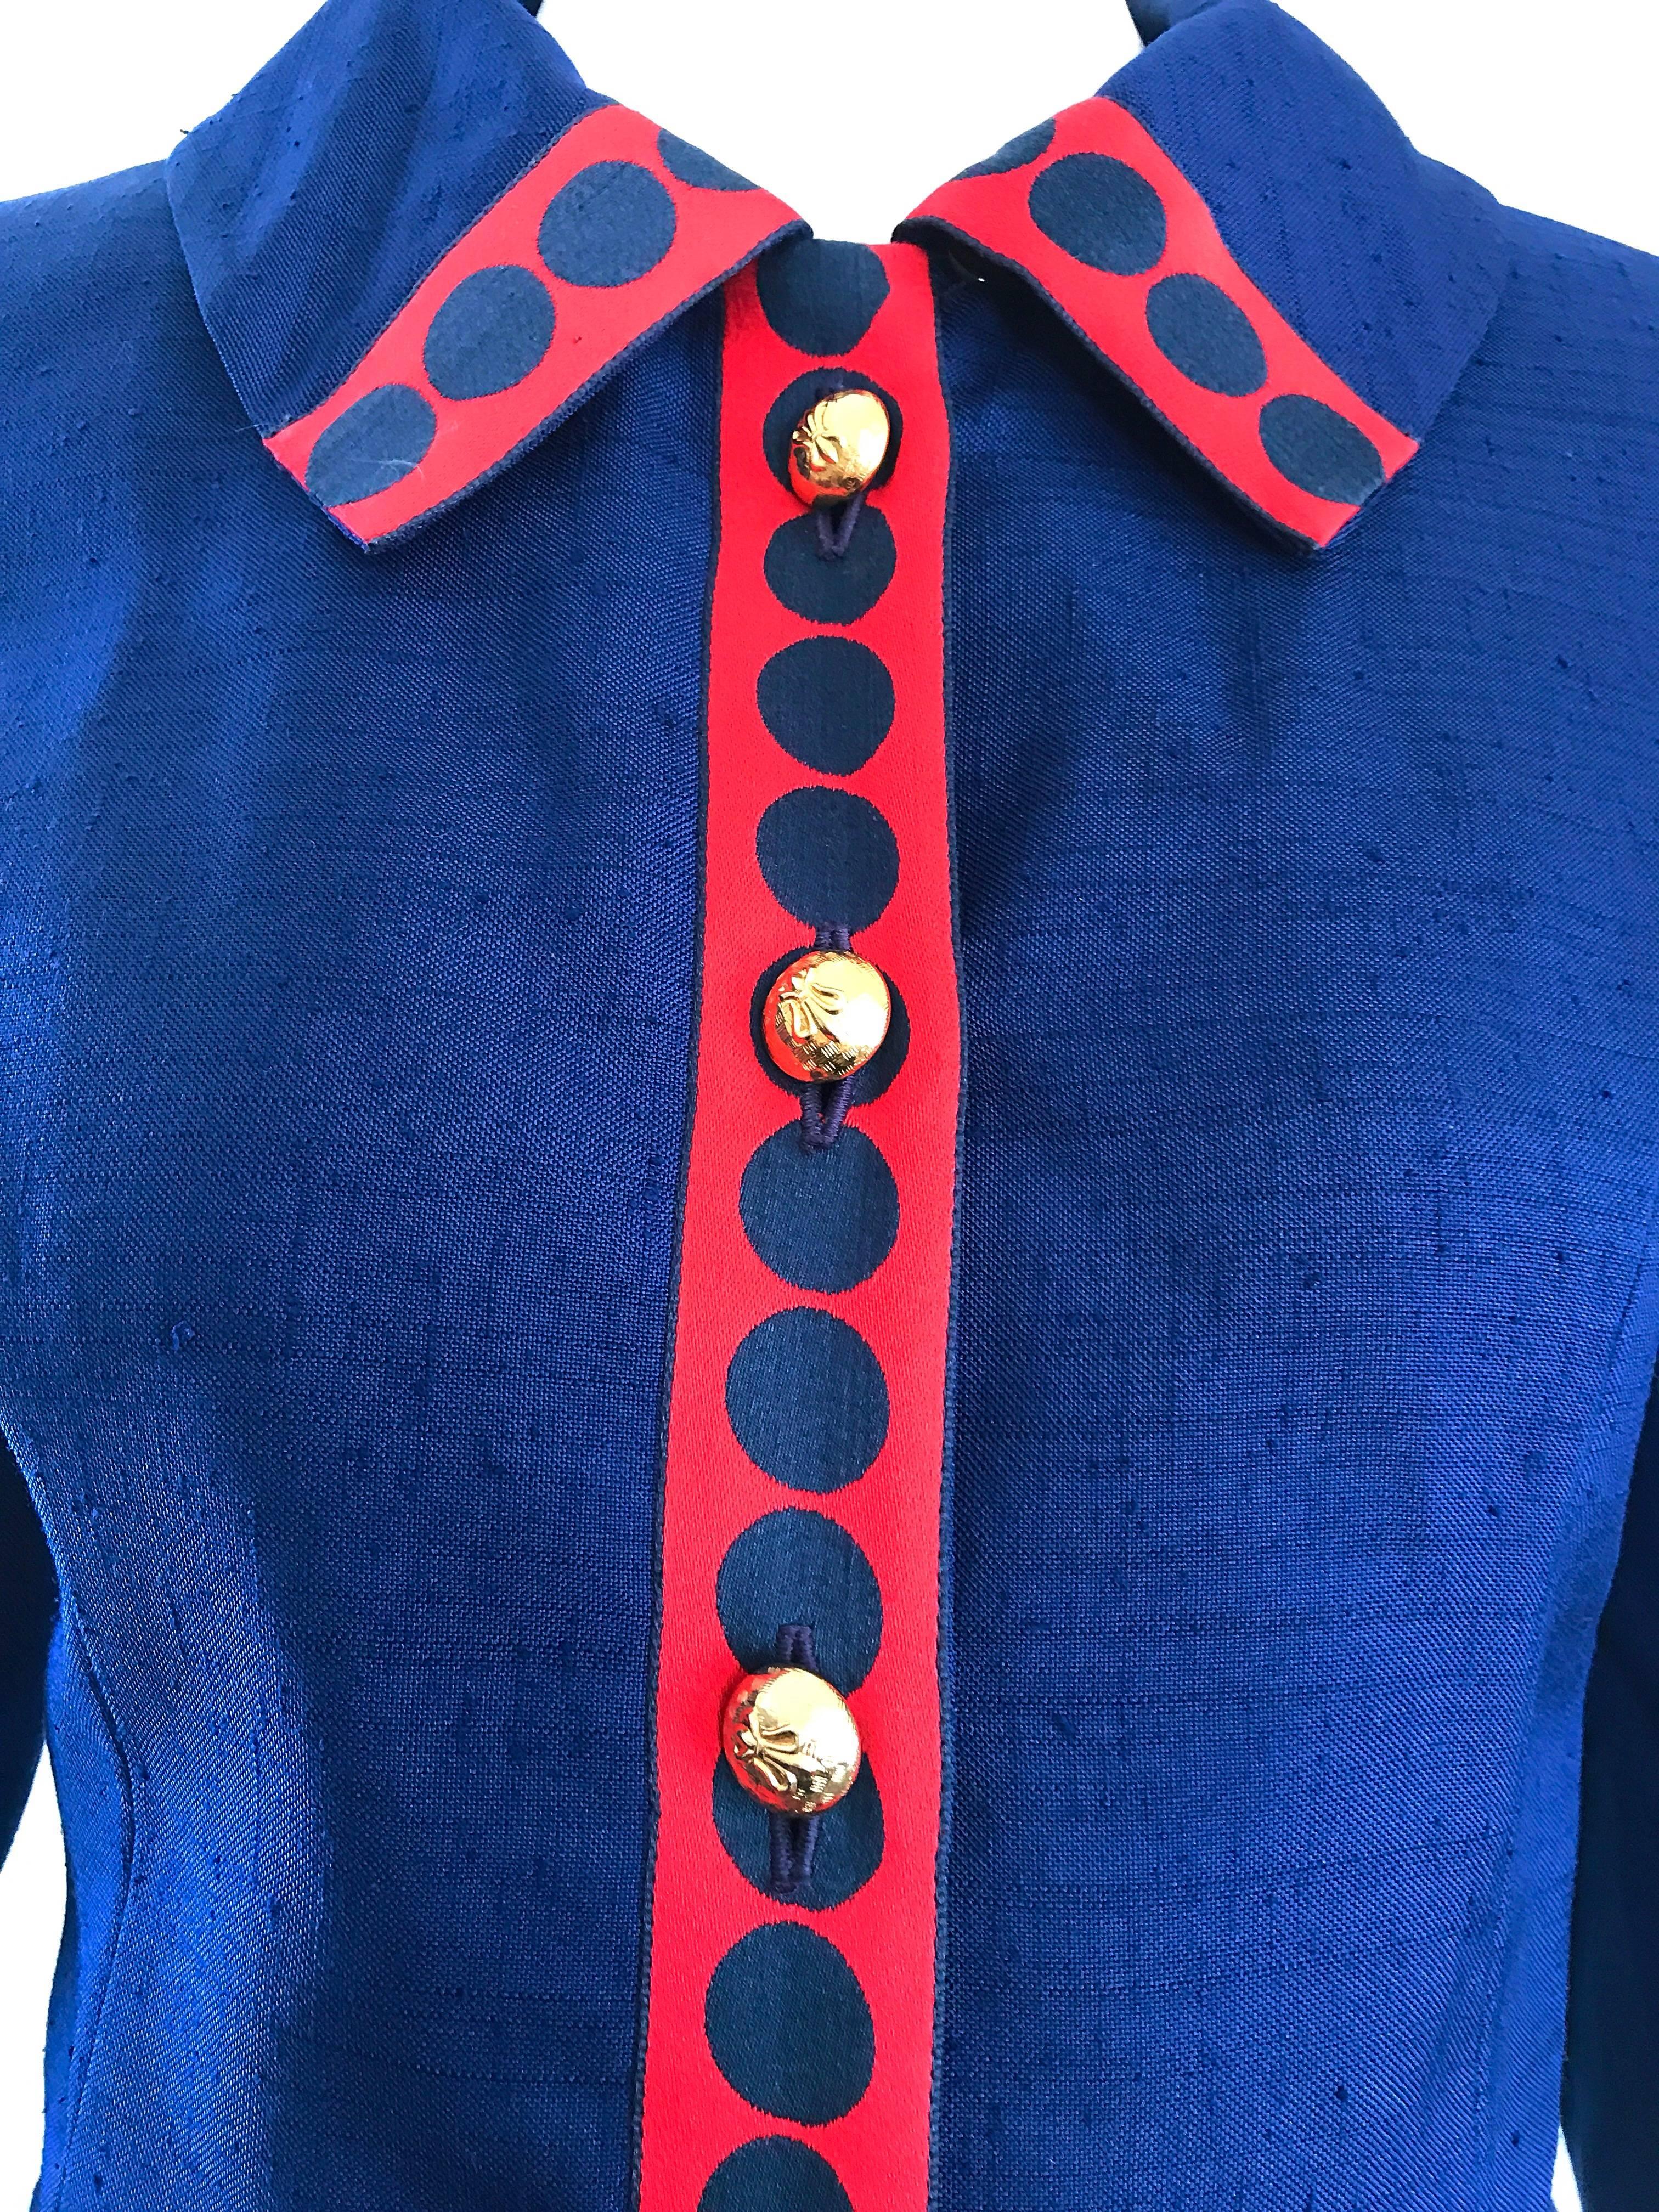 Geoffrey Beene 1960s Navy Blue Red Silk Nautical Polka Dot Vintage 60s Jacket 4